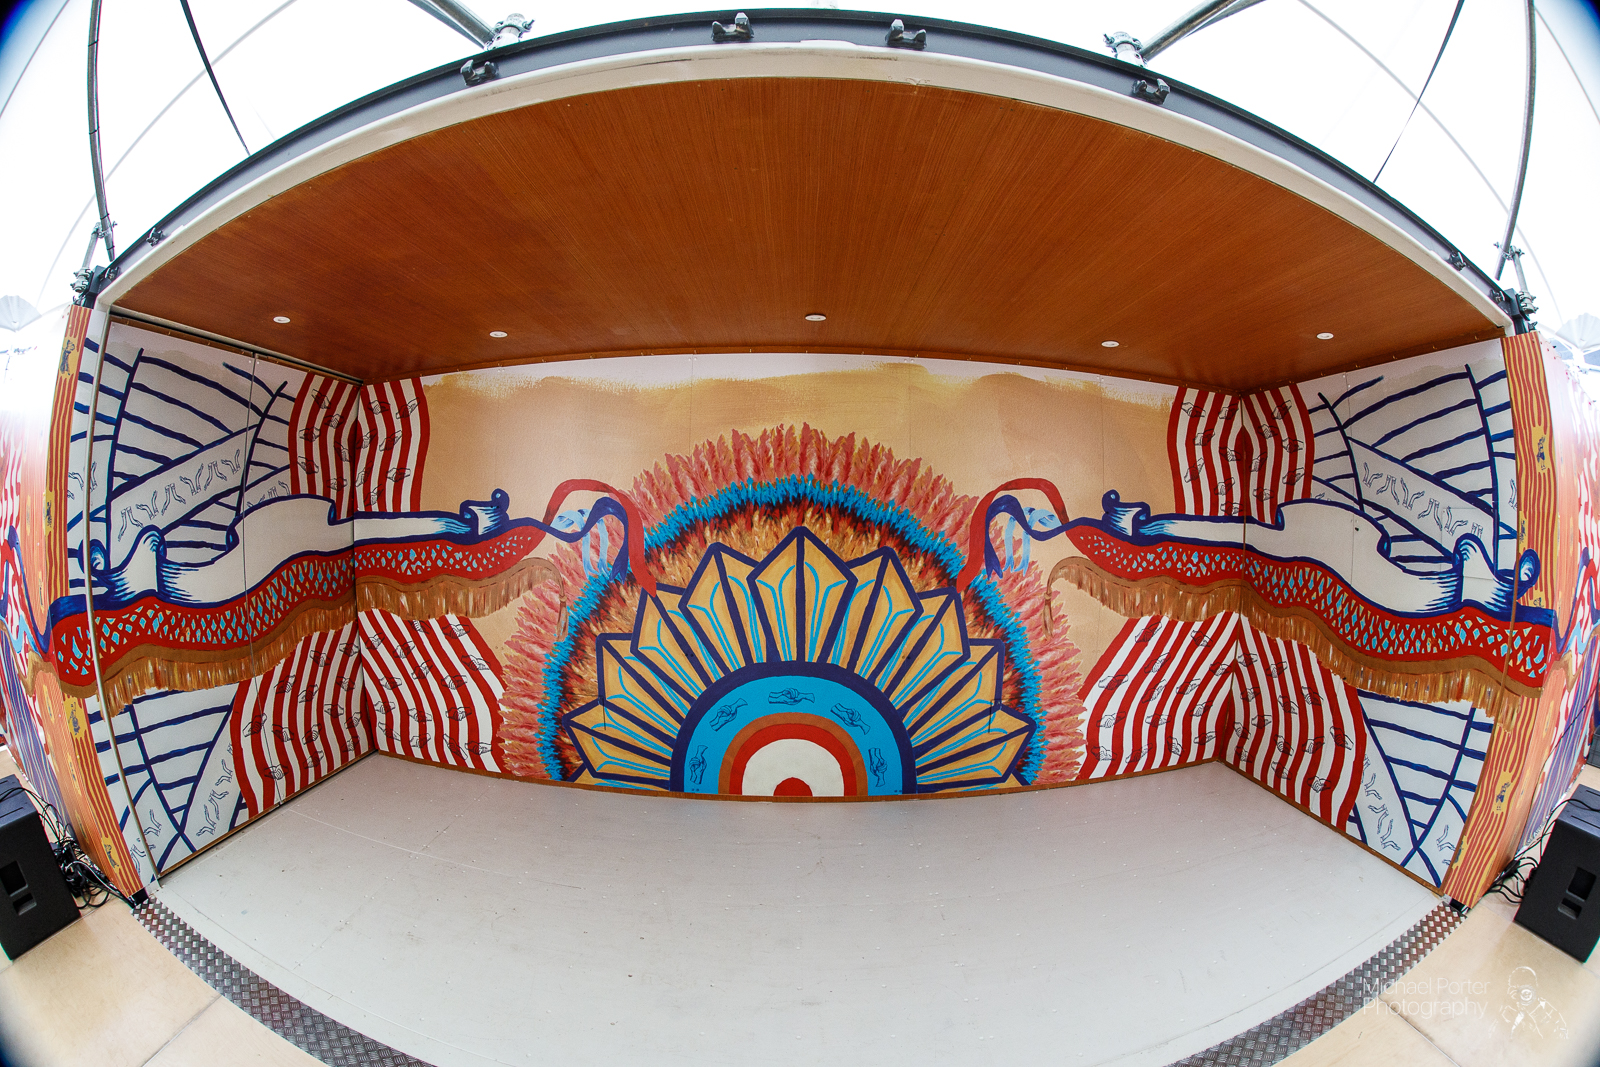 Image taken of the inside of The MET tent